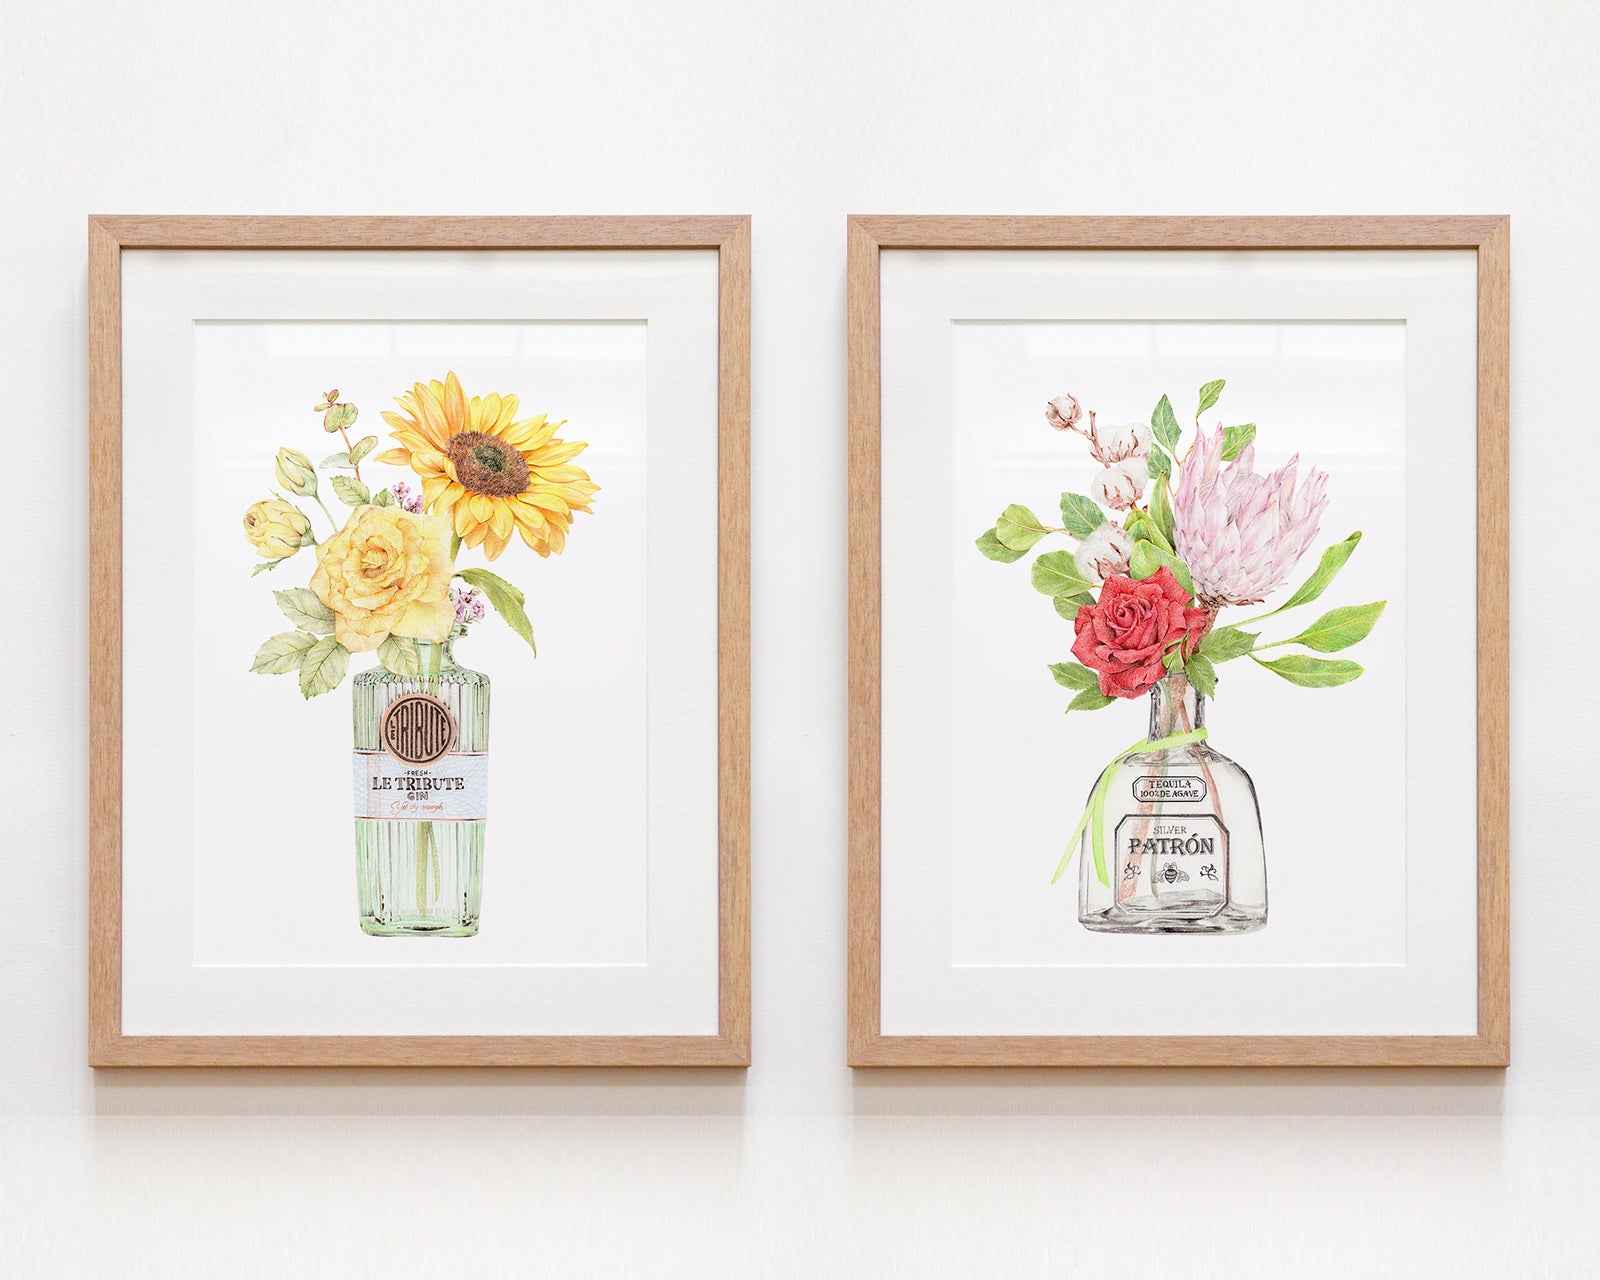 Framed wall art set with cocktail bottles and botanicals